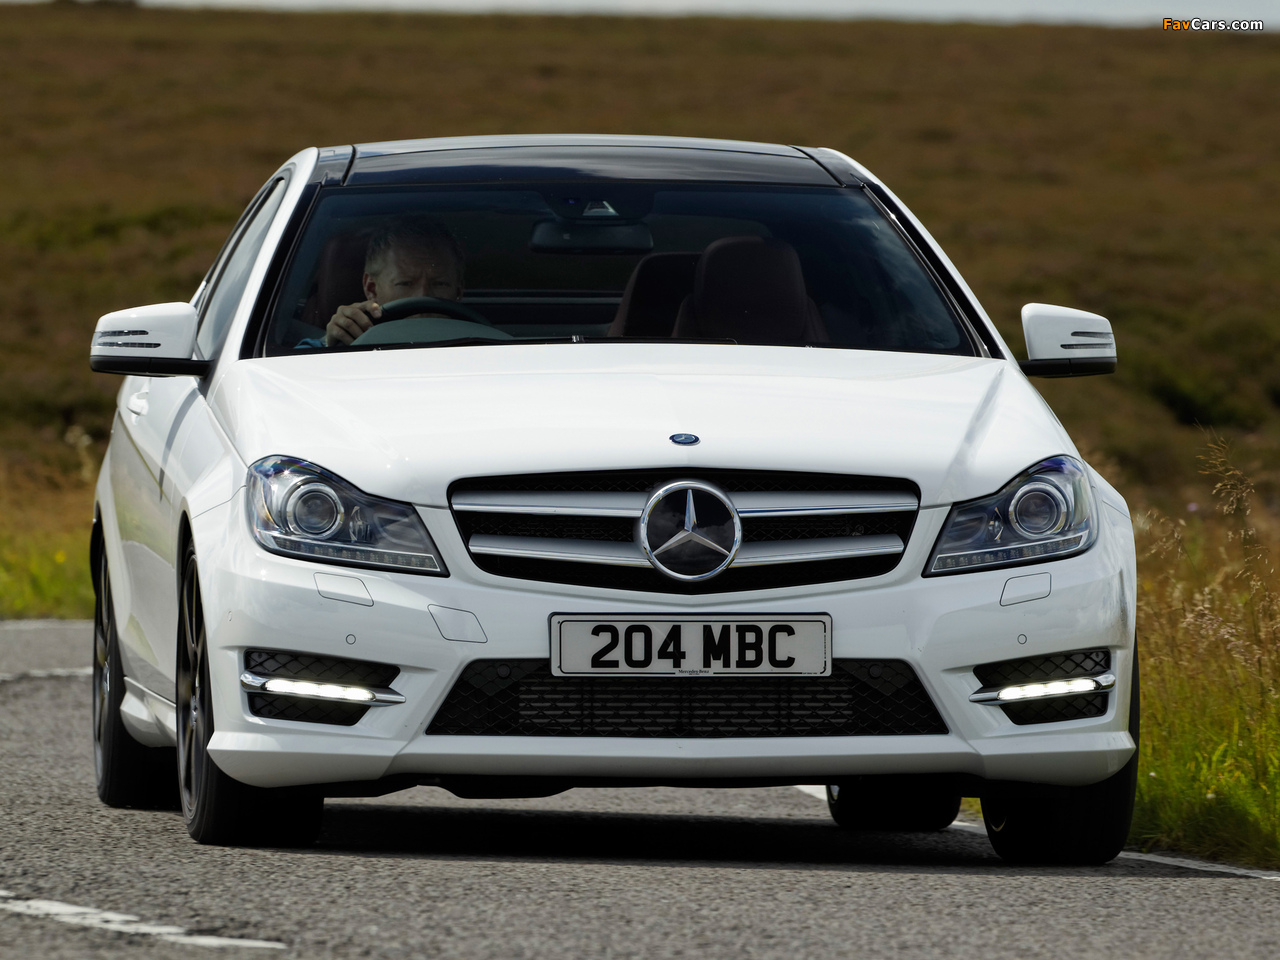 Mercedes-Benz C 220 CDI Coupe UK-spec (C204) 2011 images (1280 x 960)